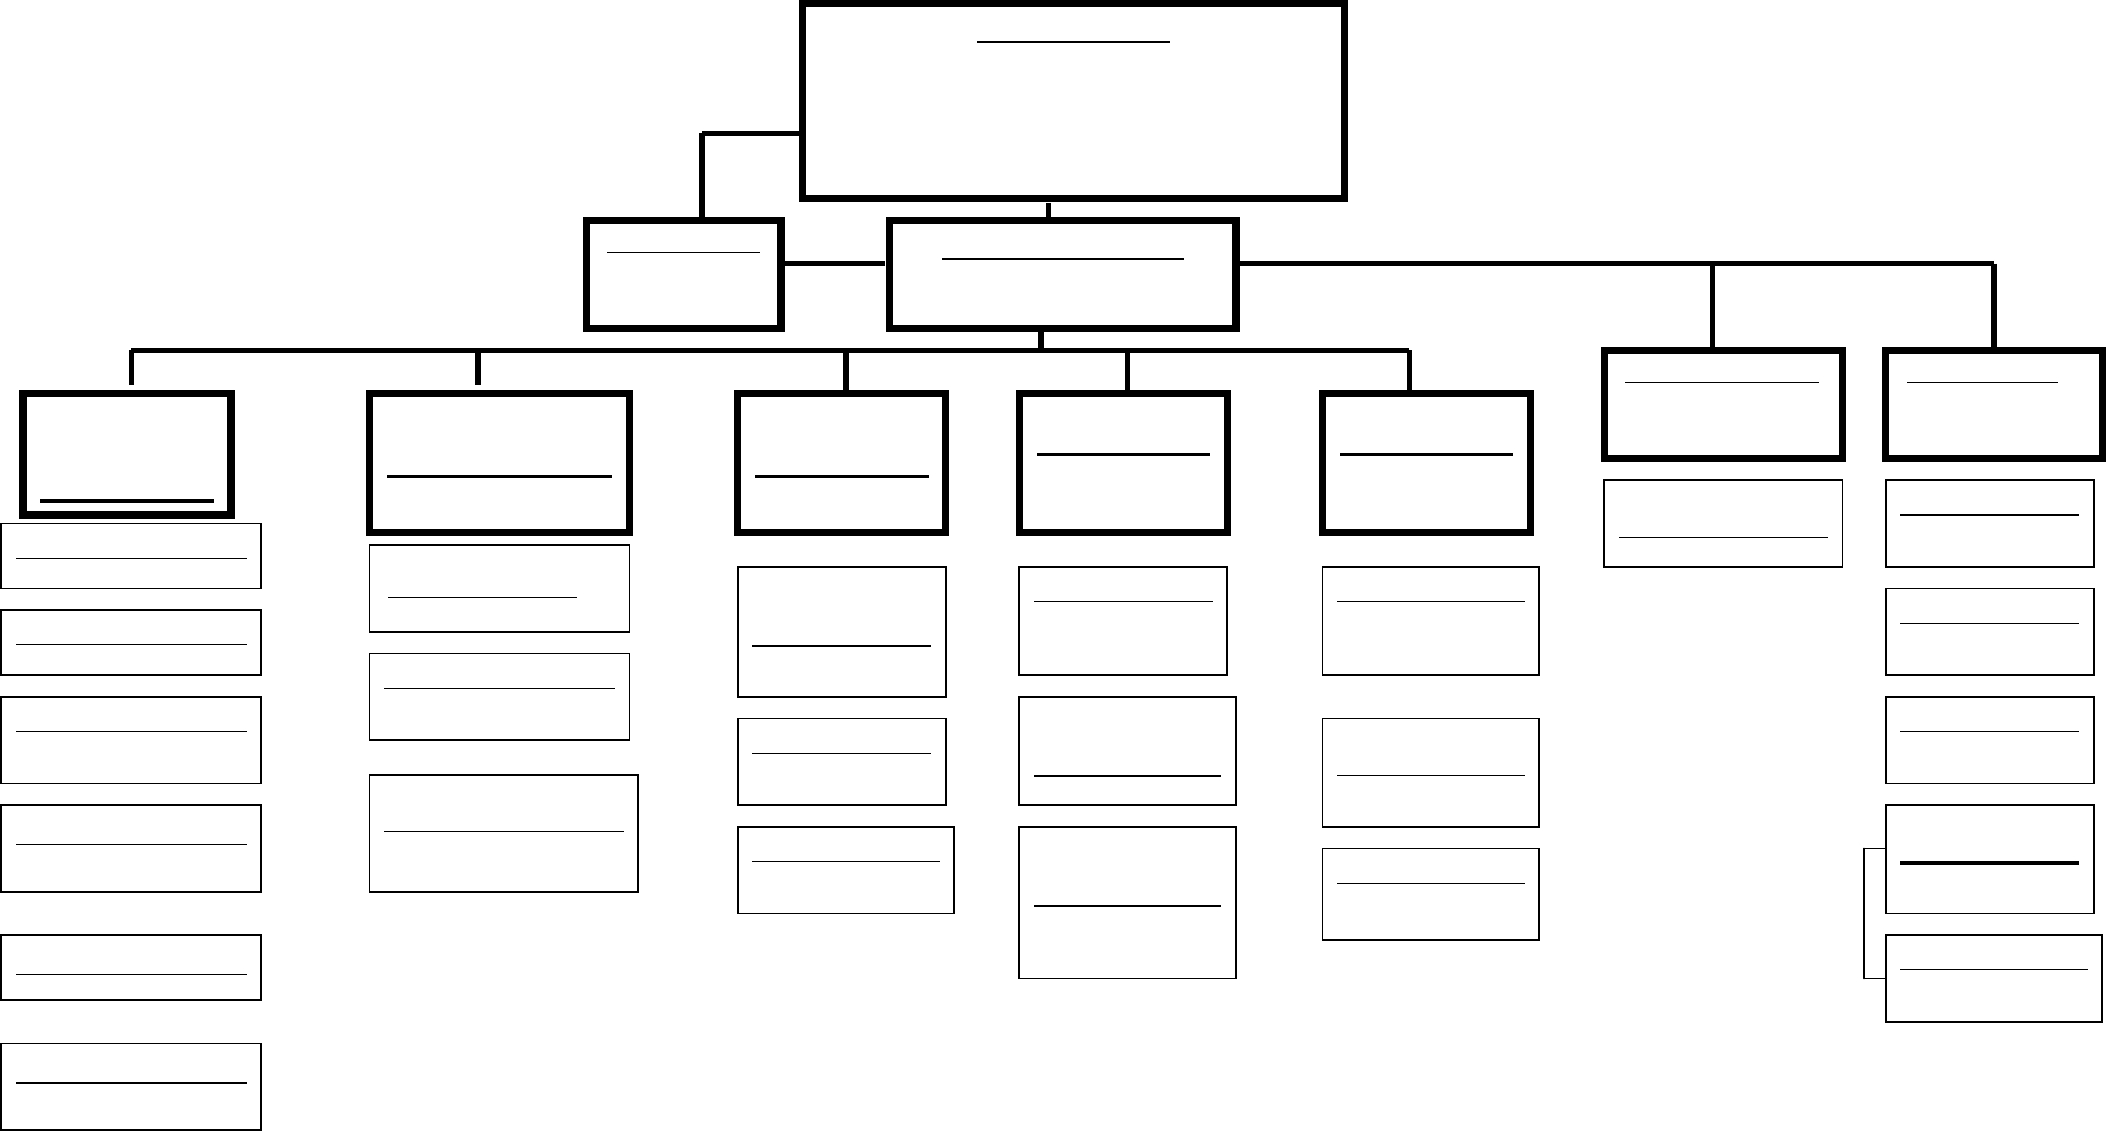 Blank Organizational Chart - Cumberland College Free Download With Free Blank Organizational Chart Template